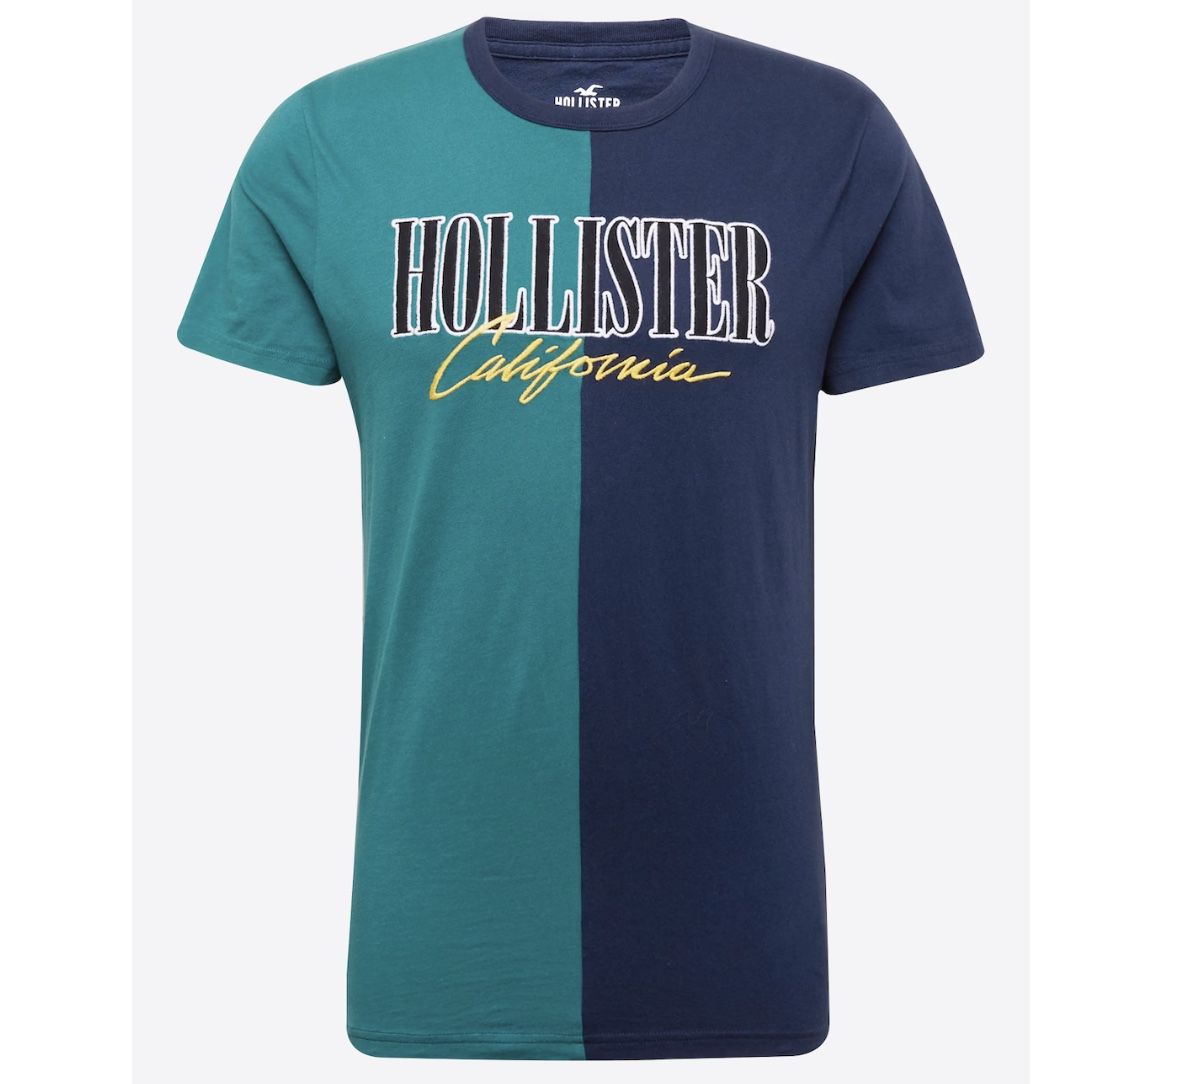 Hollister California T Shirt für 9,90€ (statt 16€)   S, M, L